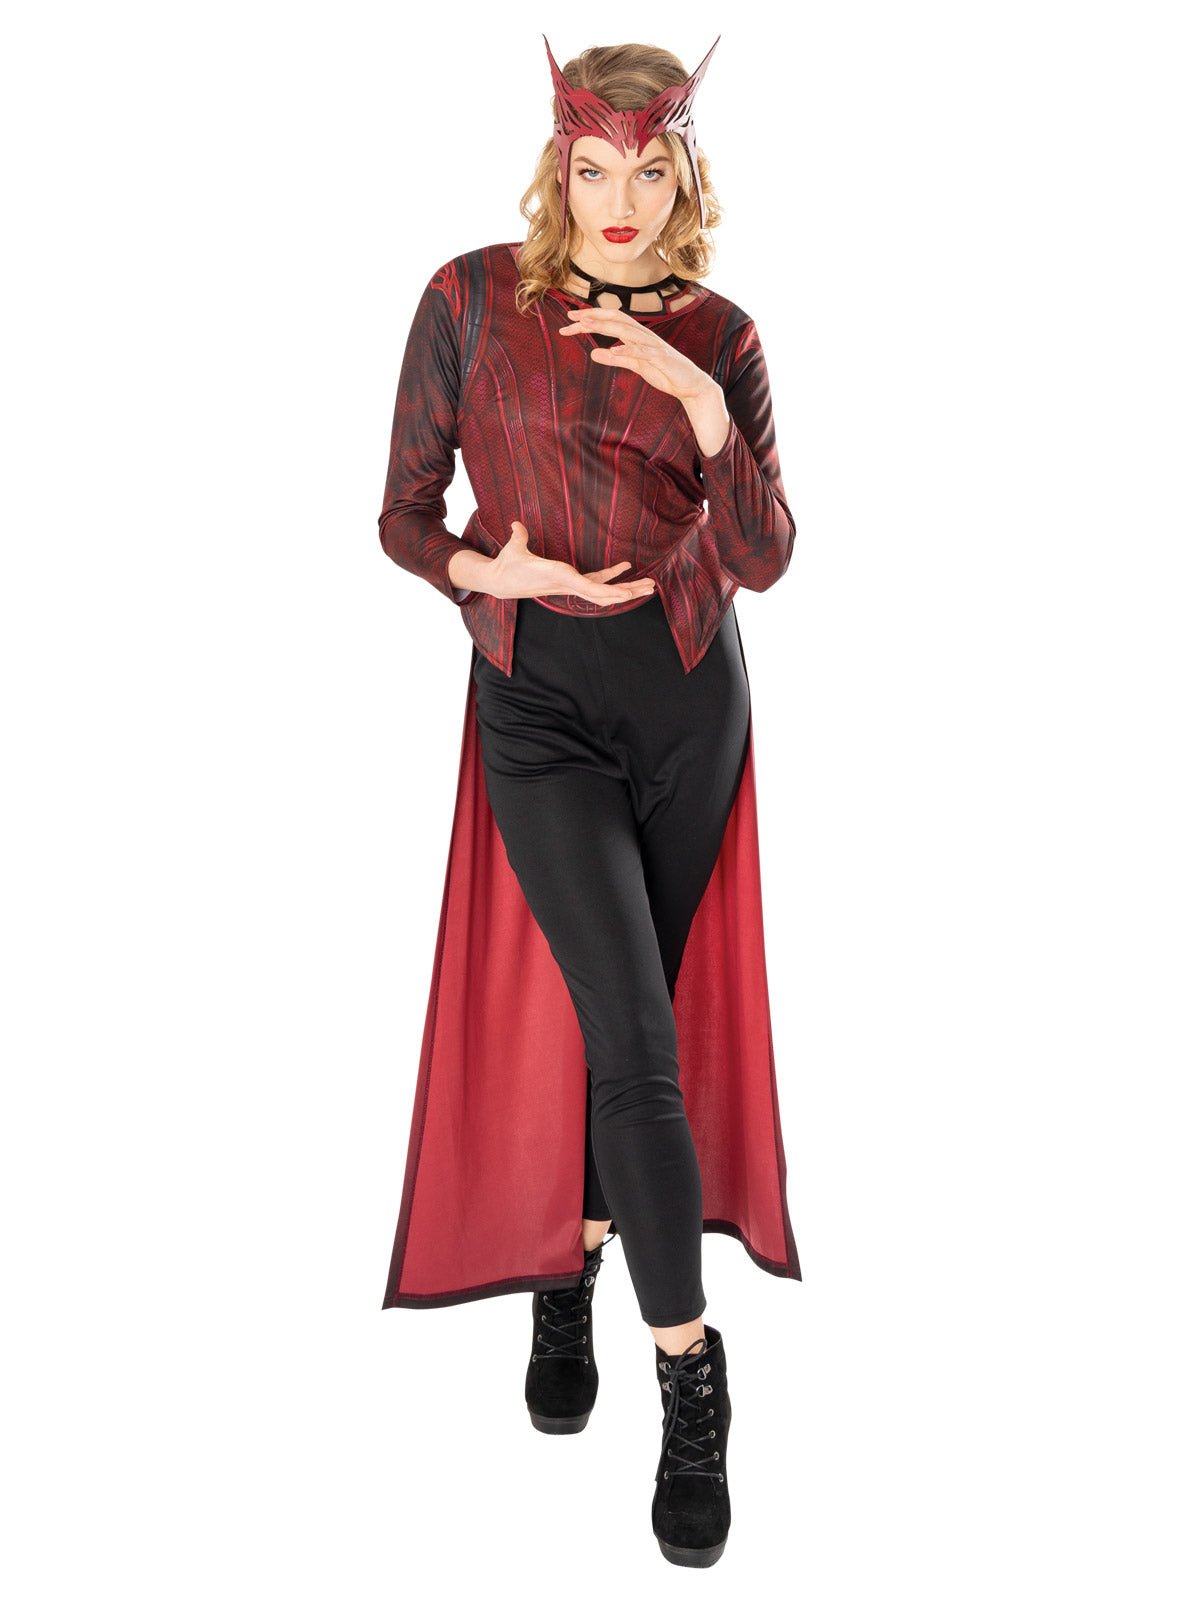 Scarlet Witch - Dr Strange 2 Movie Costume Adult Ladies